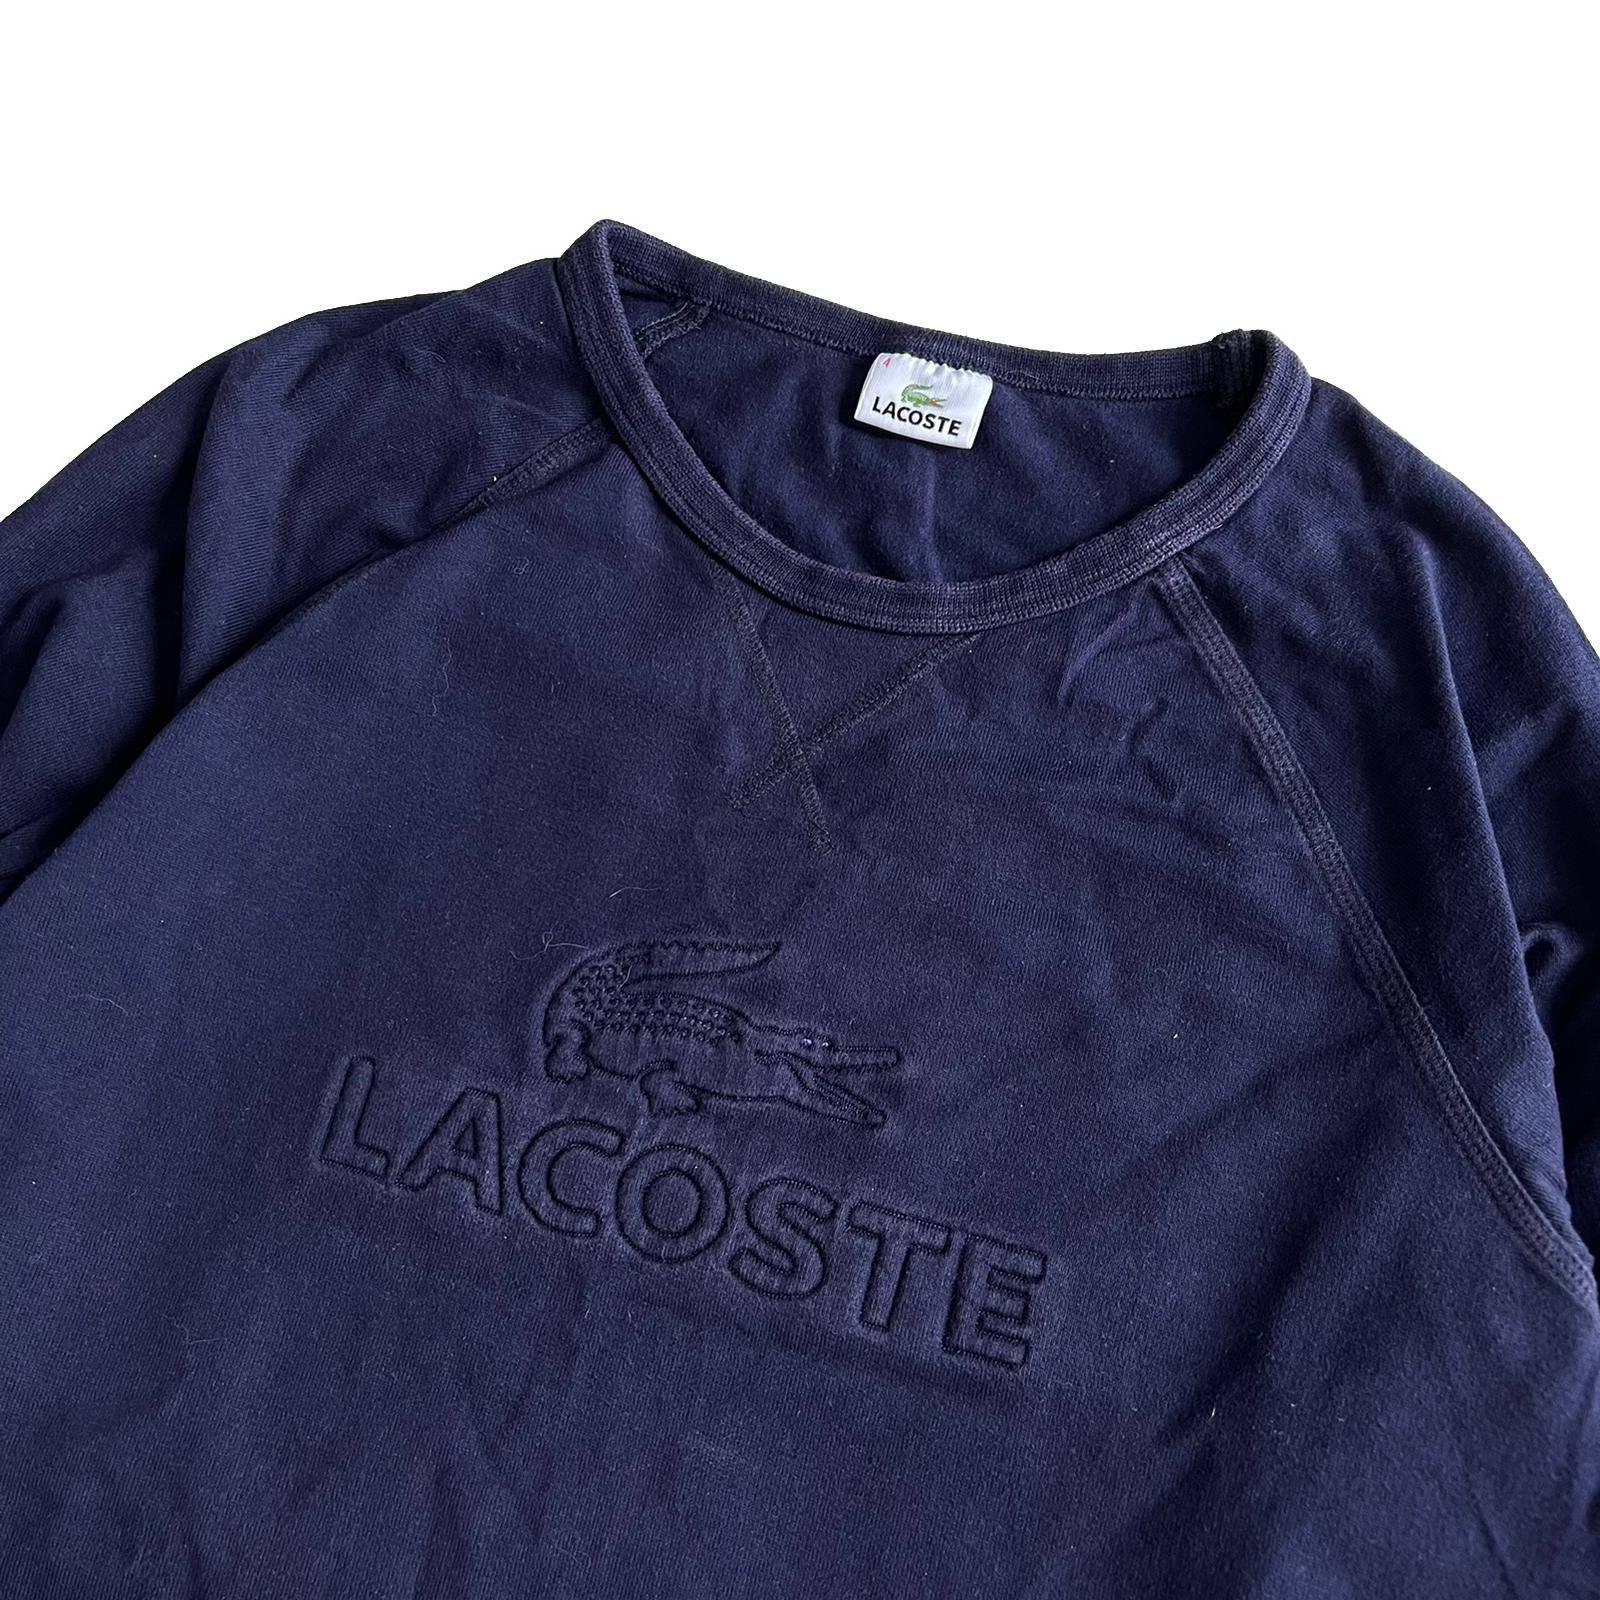 00's Lacoste sweatshirt